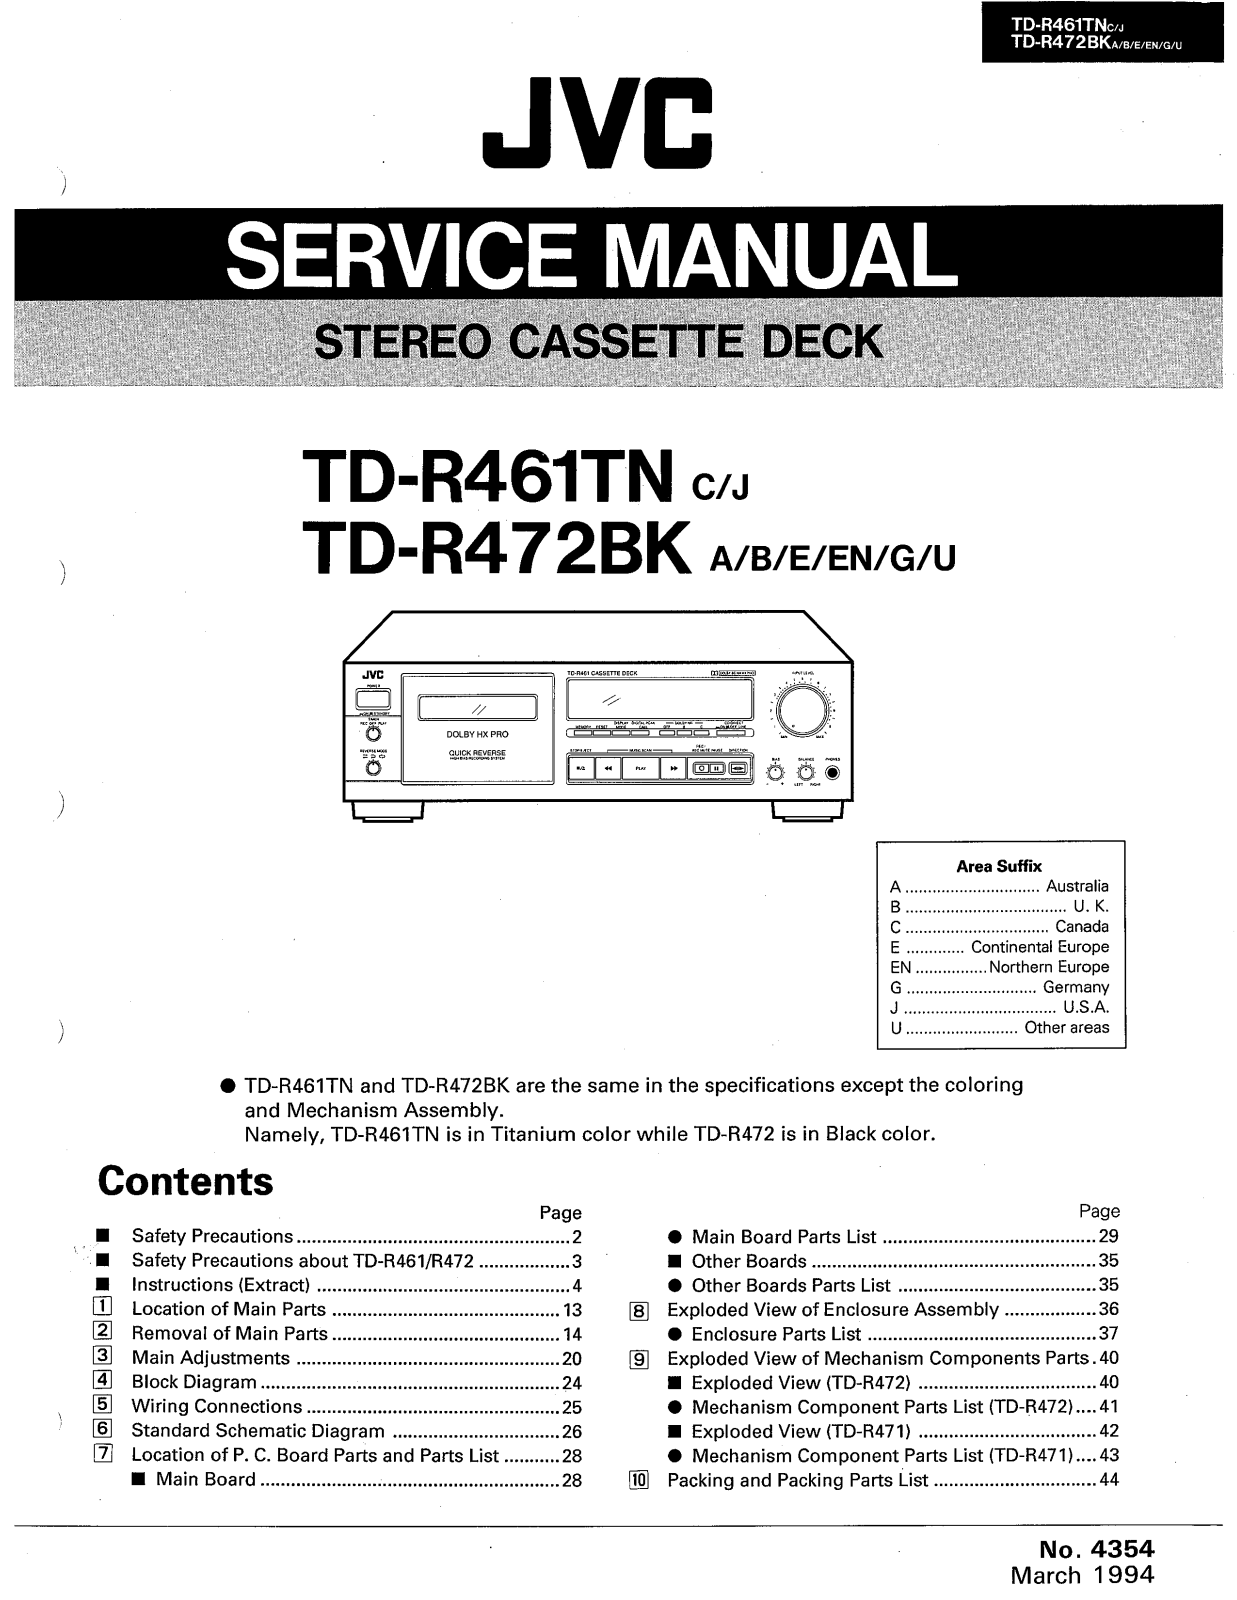 Jvc TD-R461-TN, TD-R472-BK Service Manual